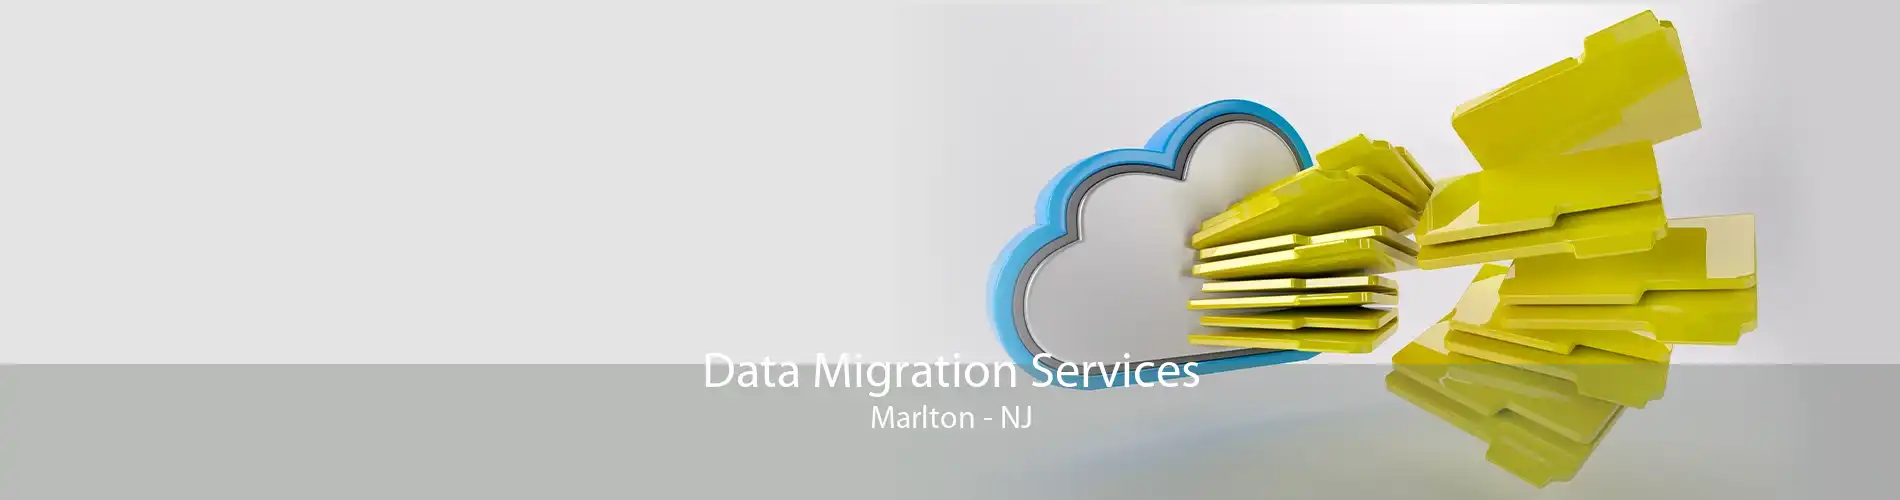 Data Migration Services Marlton - NJ